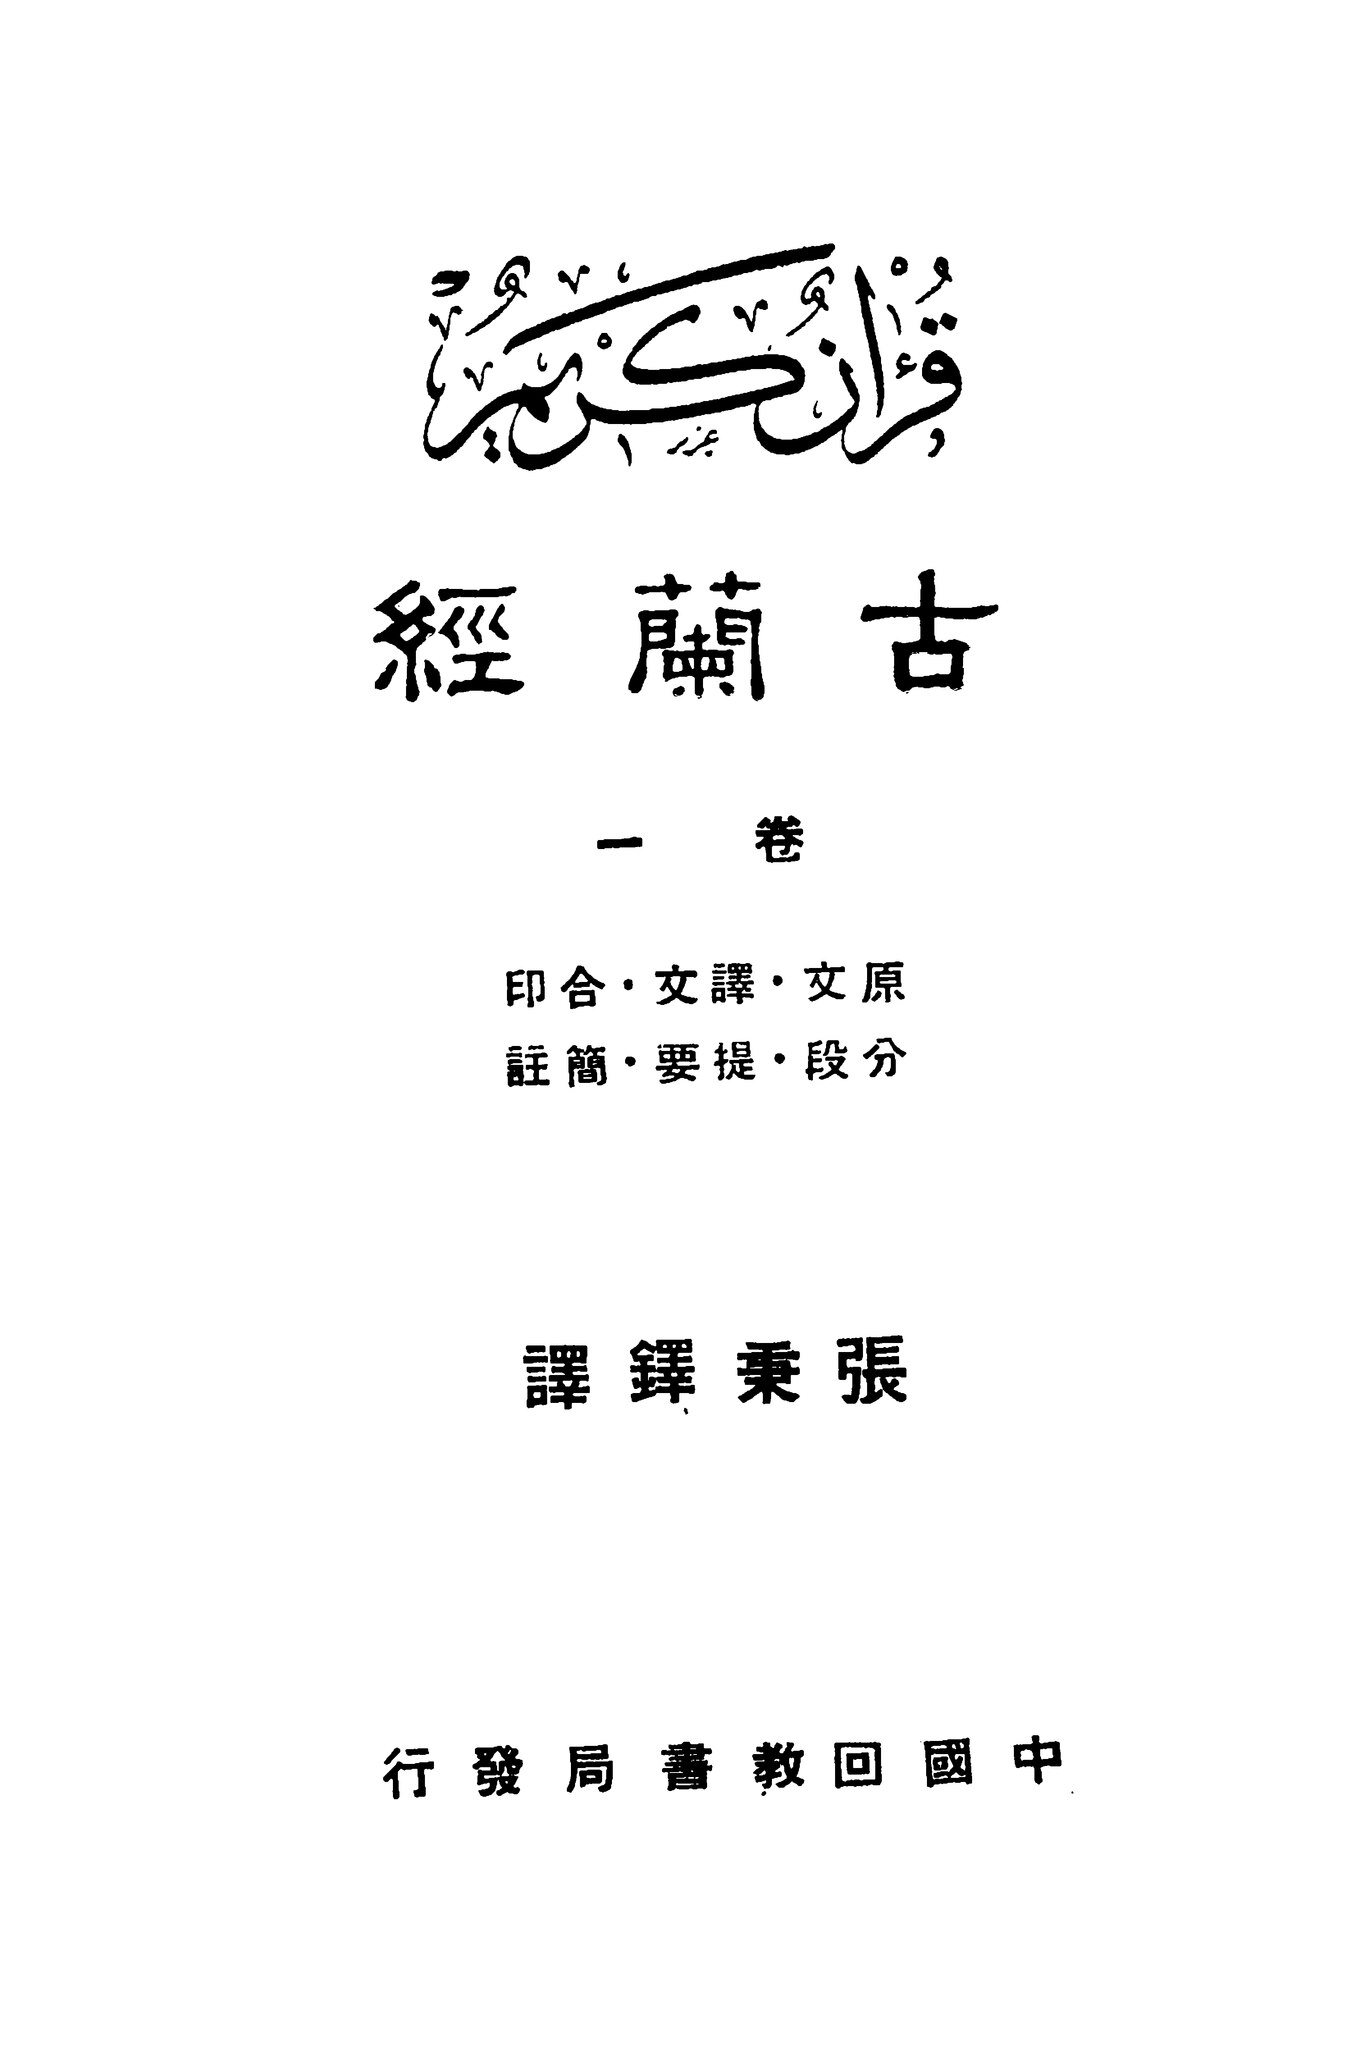 File:CADAL07005218 古蘭經第一卷.djvu - Wikimedia Commons